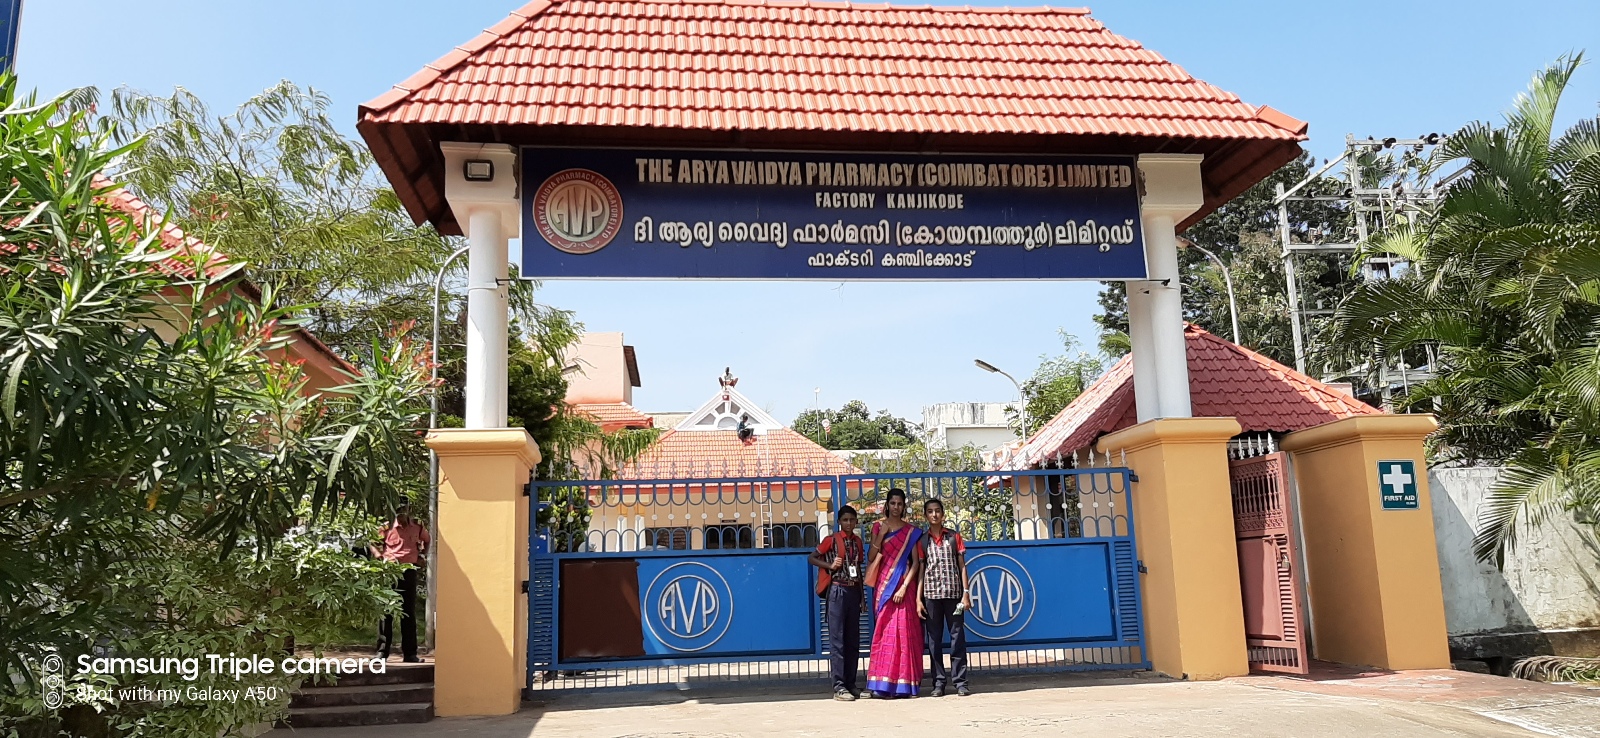 Arya Vaidya pharmacy factory kanjikode